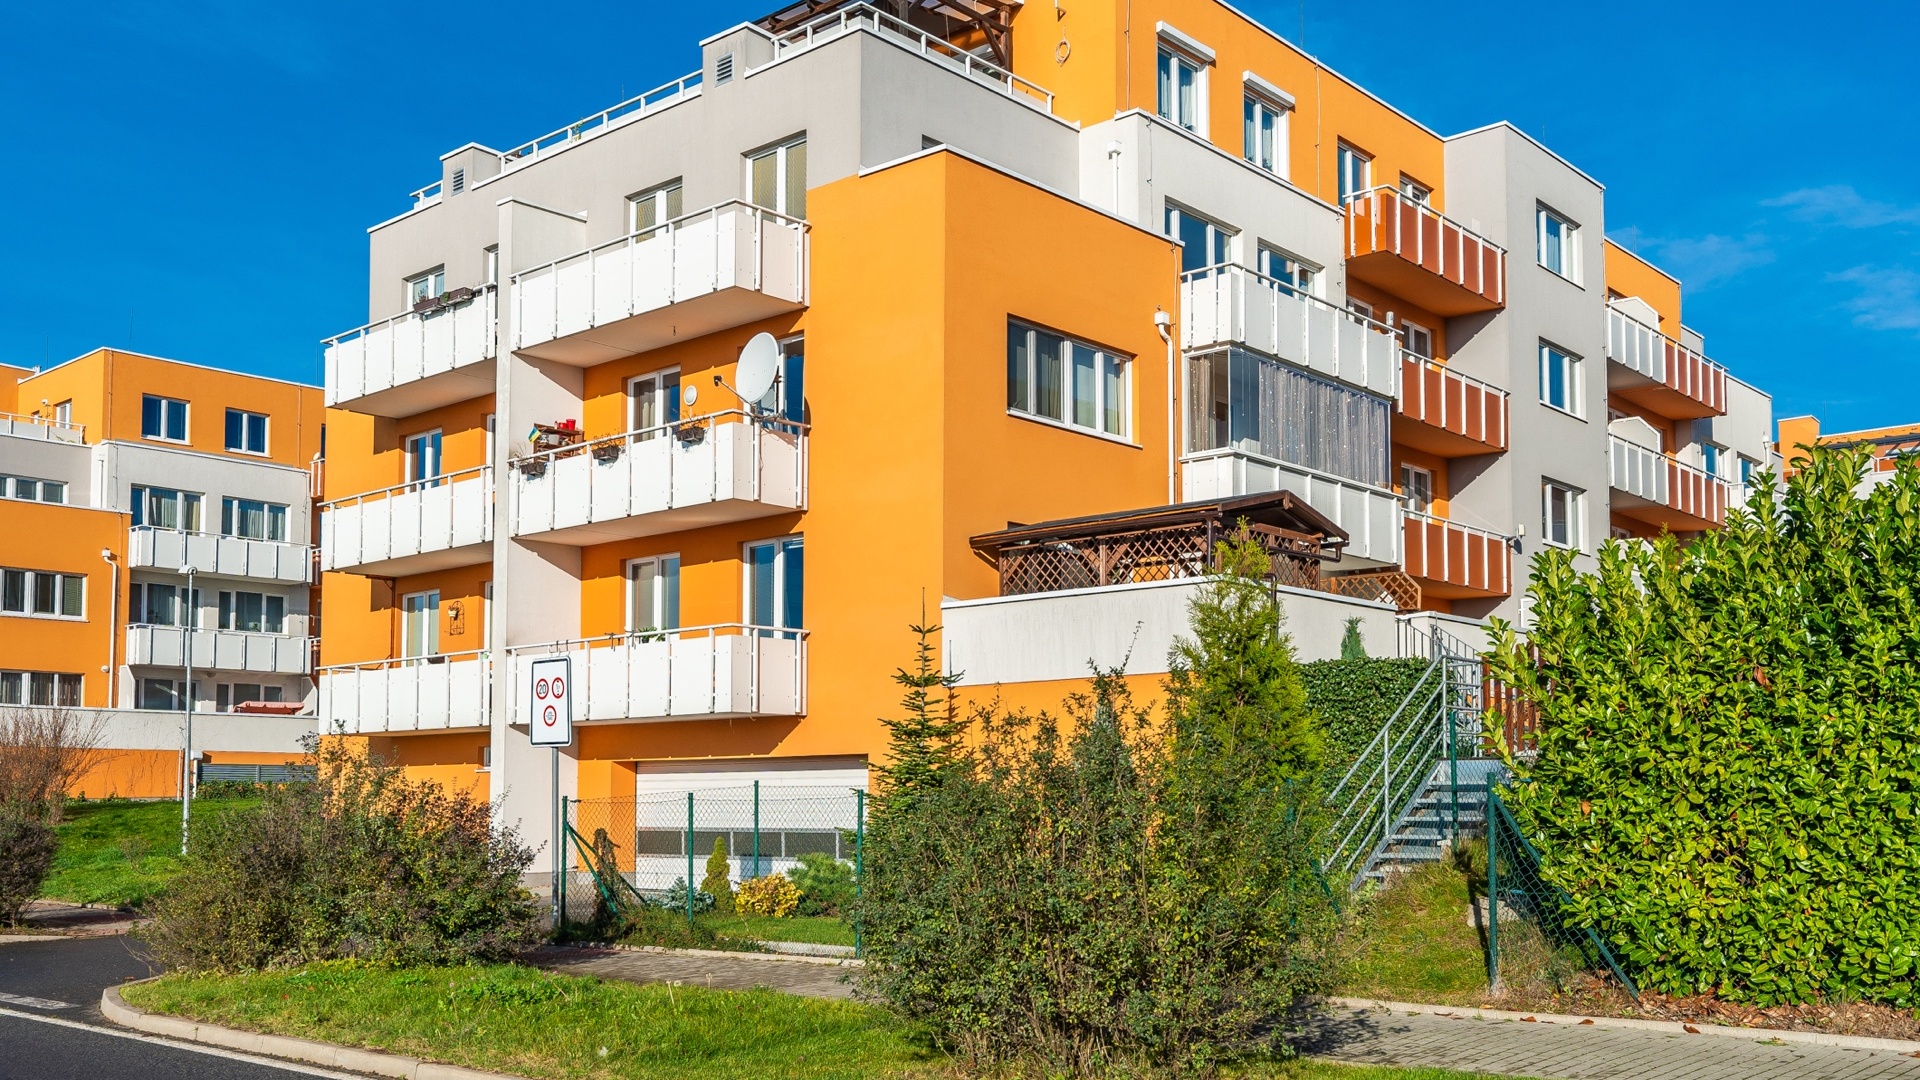 Pronájem bytu 1+kk 31 m² + balkon 8 m² v novostavbě, ulice Sicherova, Praha